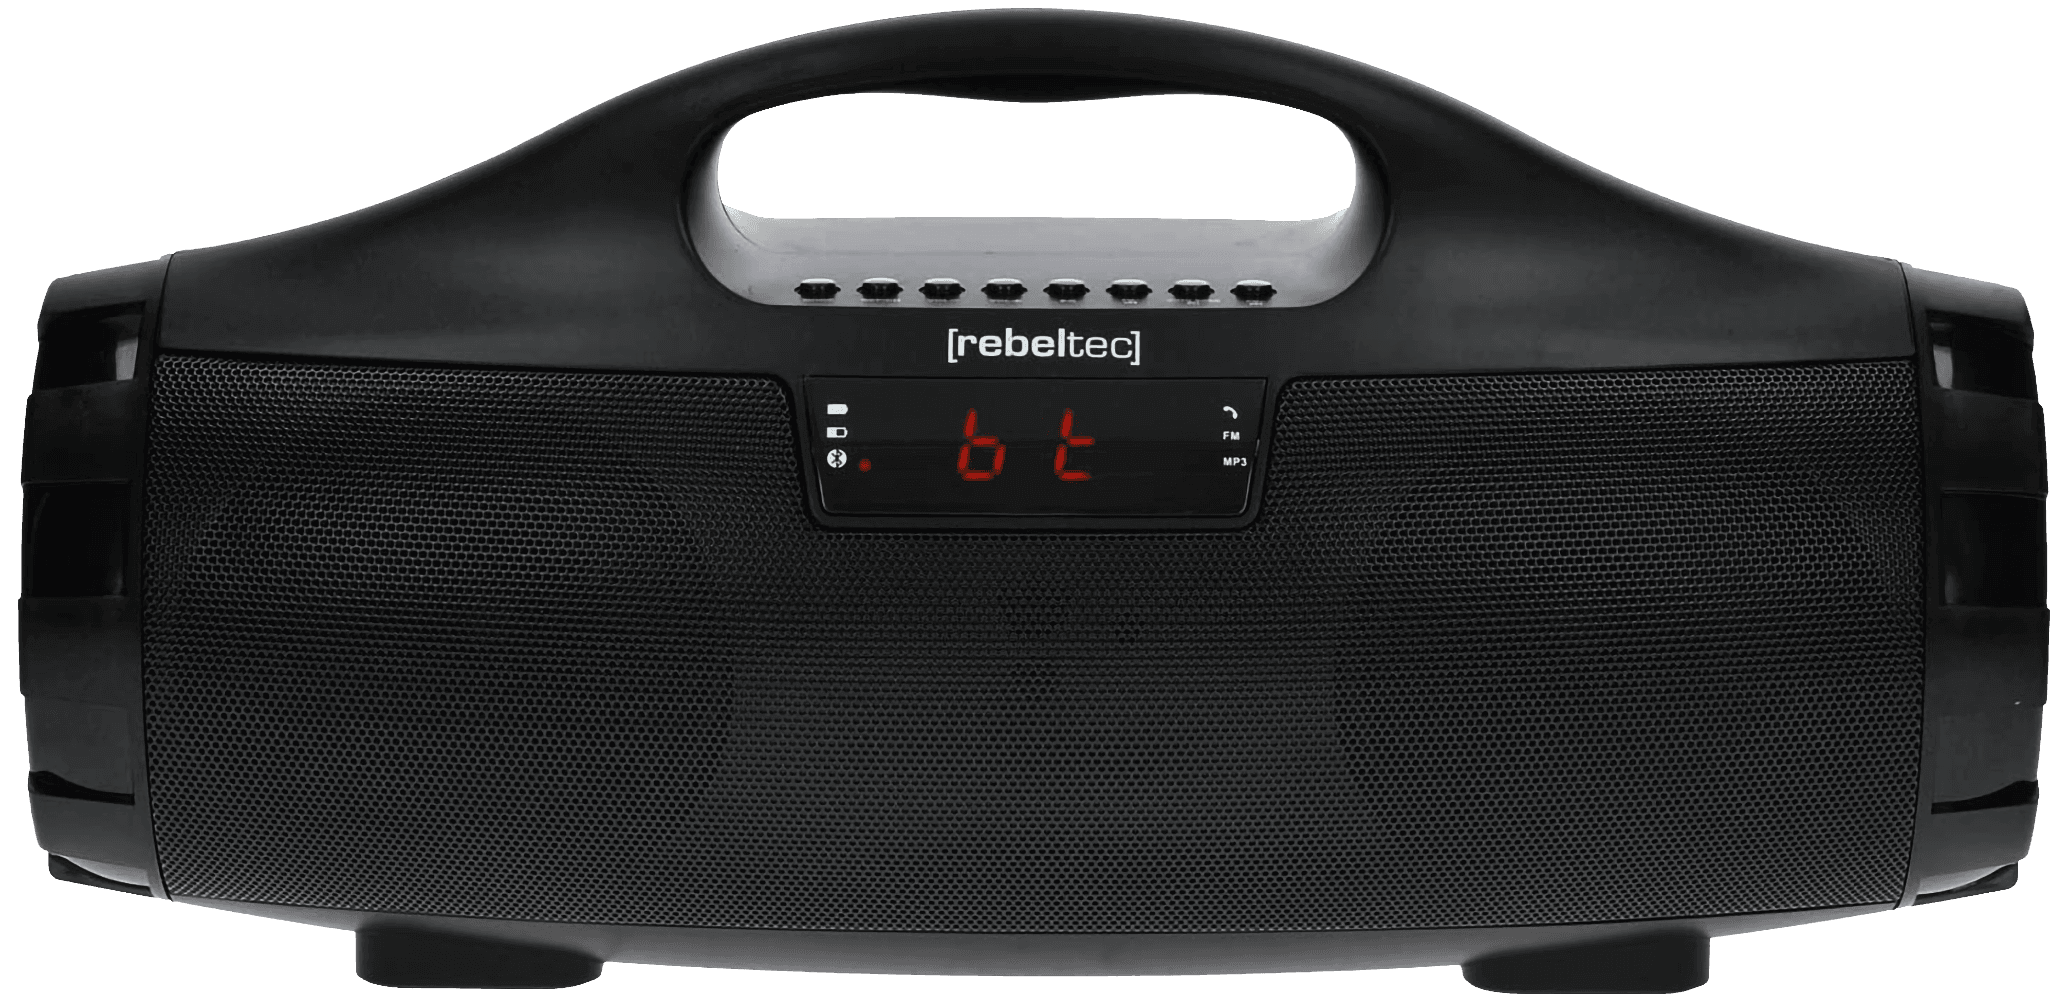 Huawei P40 Pro kompatibilis bluetooth hangszóró Rebeltec Soundbox 390 fekete